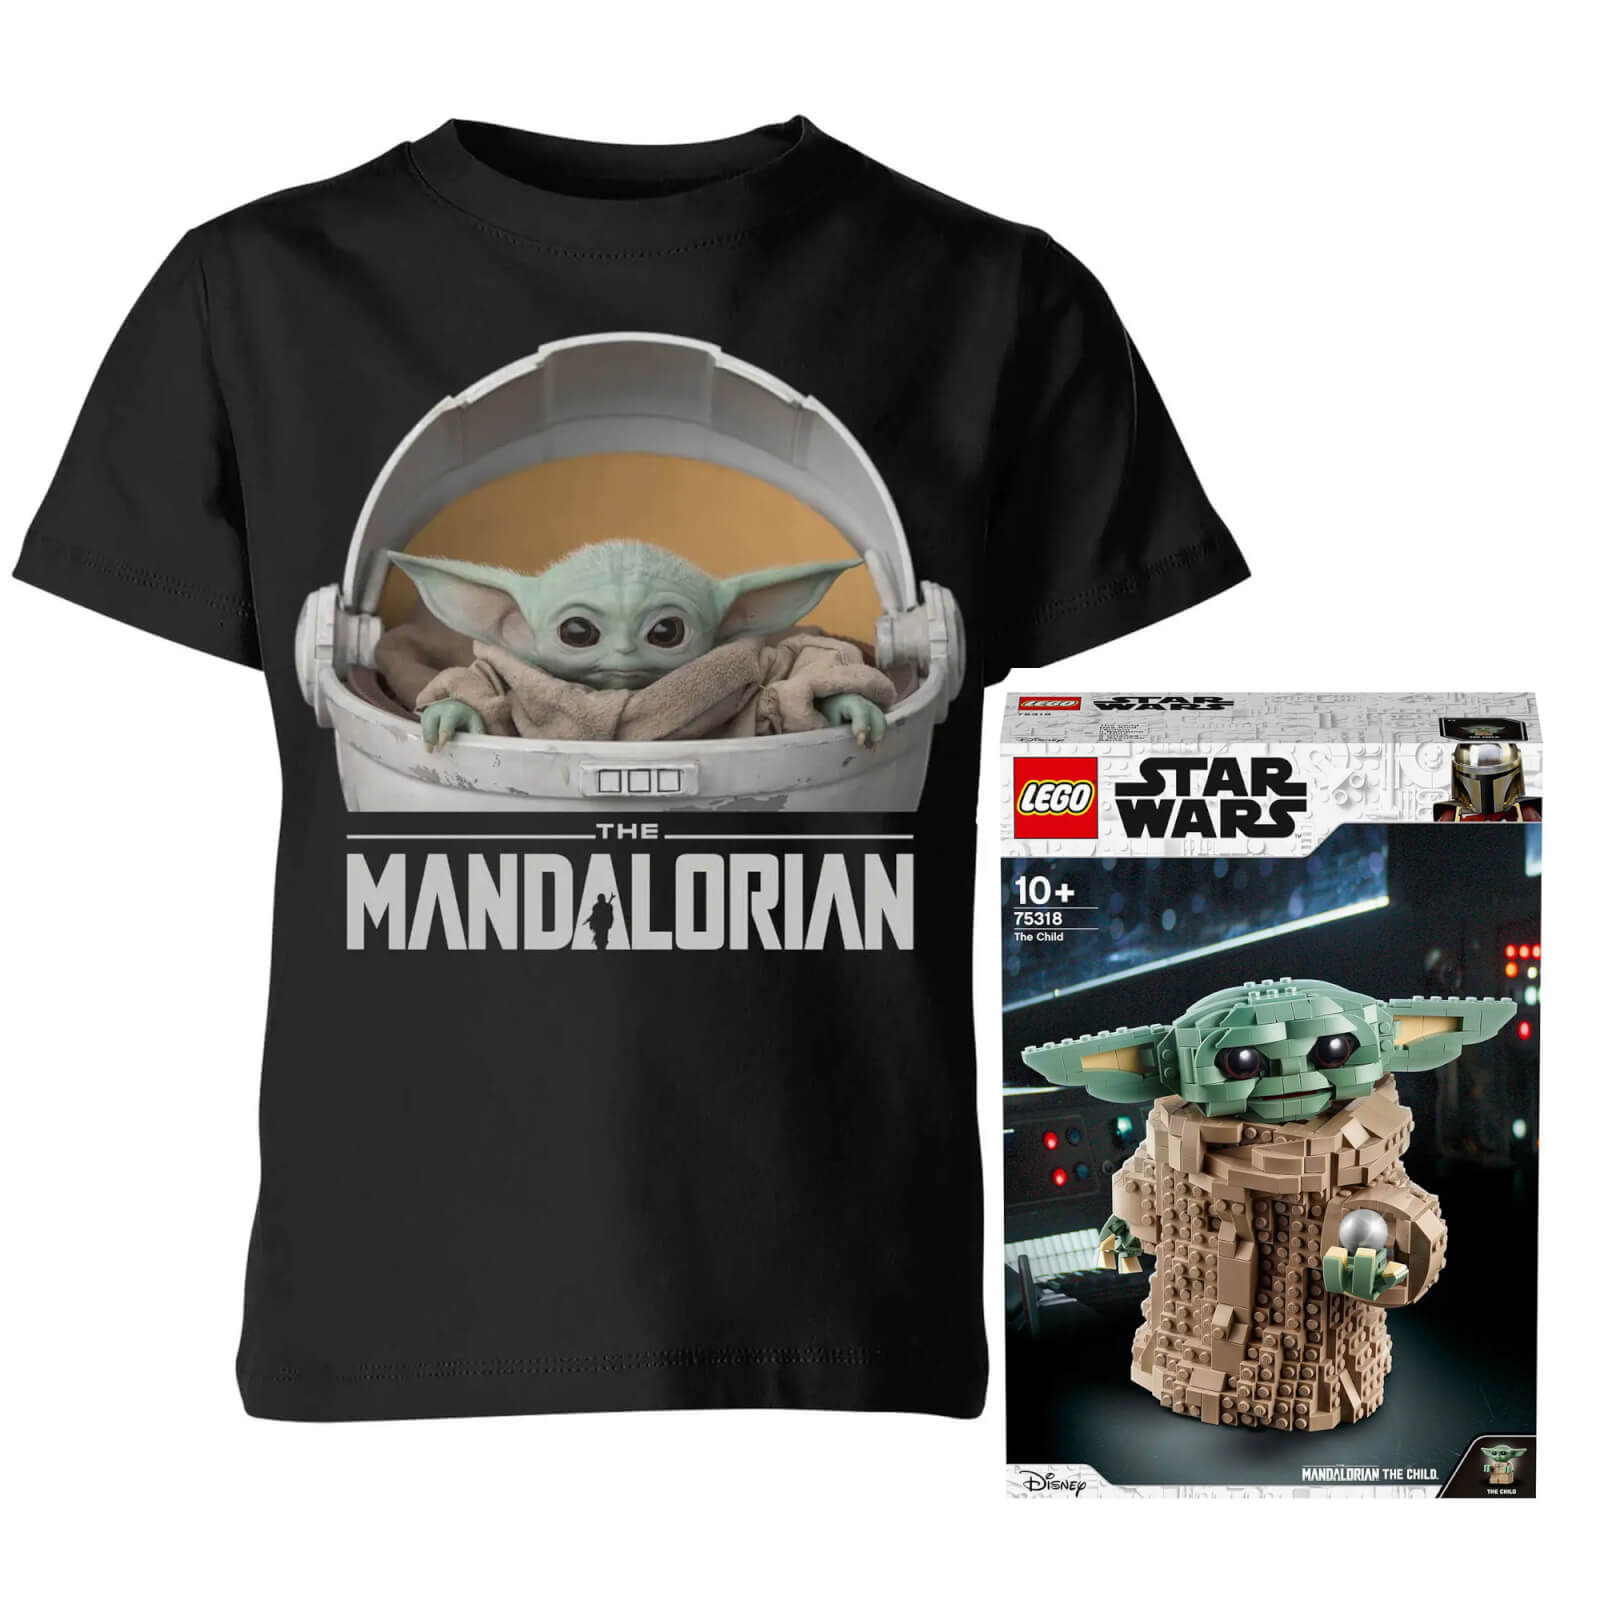 Official LEGO Star Wars: The Mandalorian The Child Building Set (75318) Kids T-Shirt Bundle - 11-12 Jahre von Original Hero